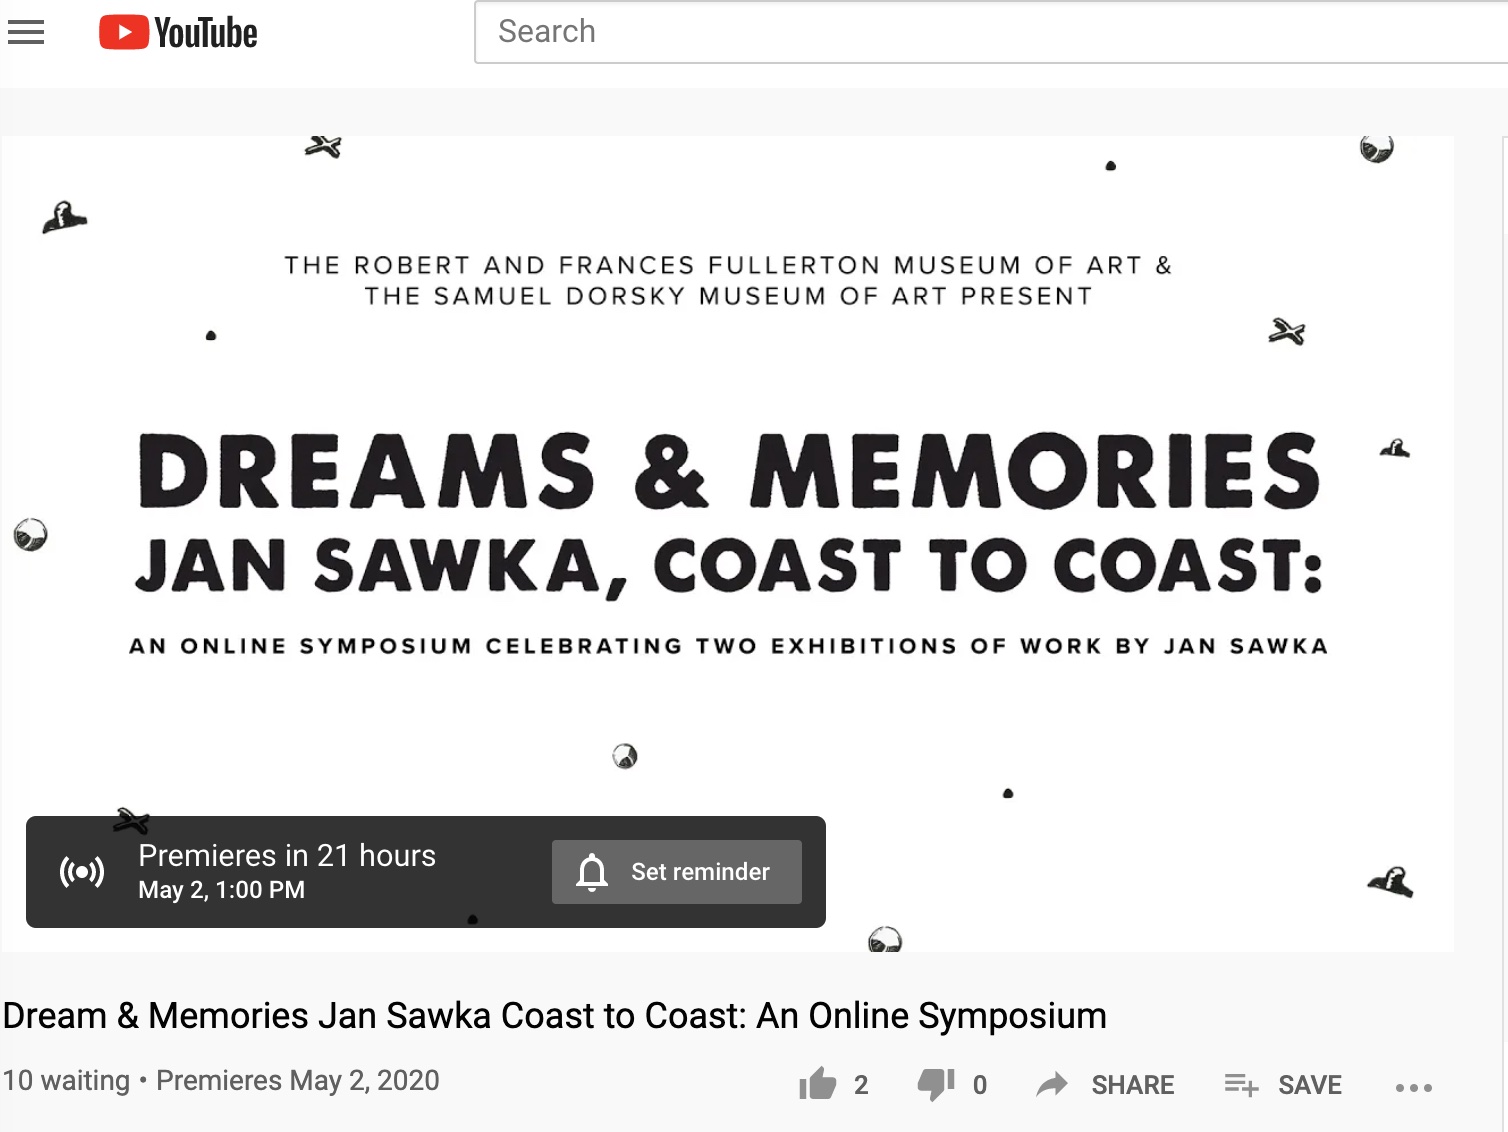 Symposium: Jan Sawka: Dreams and Memories Coast to Coast